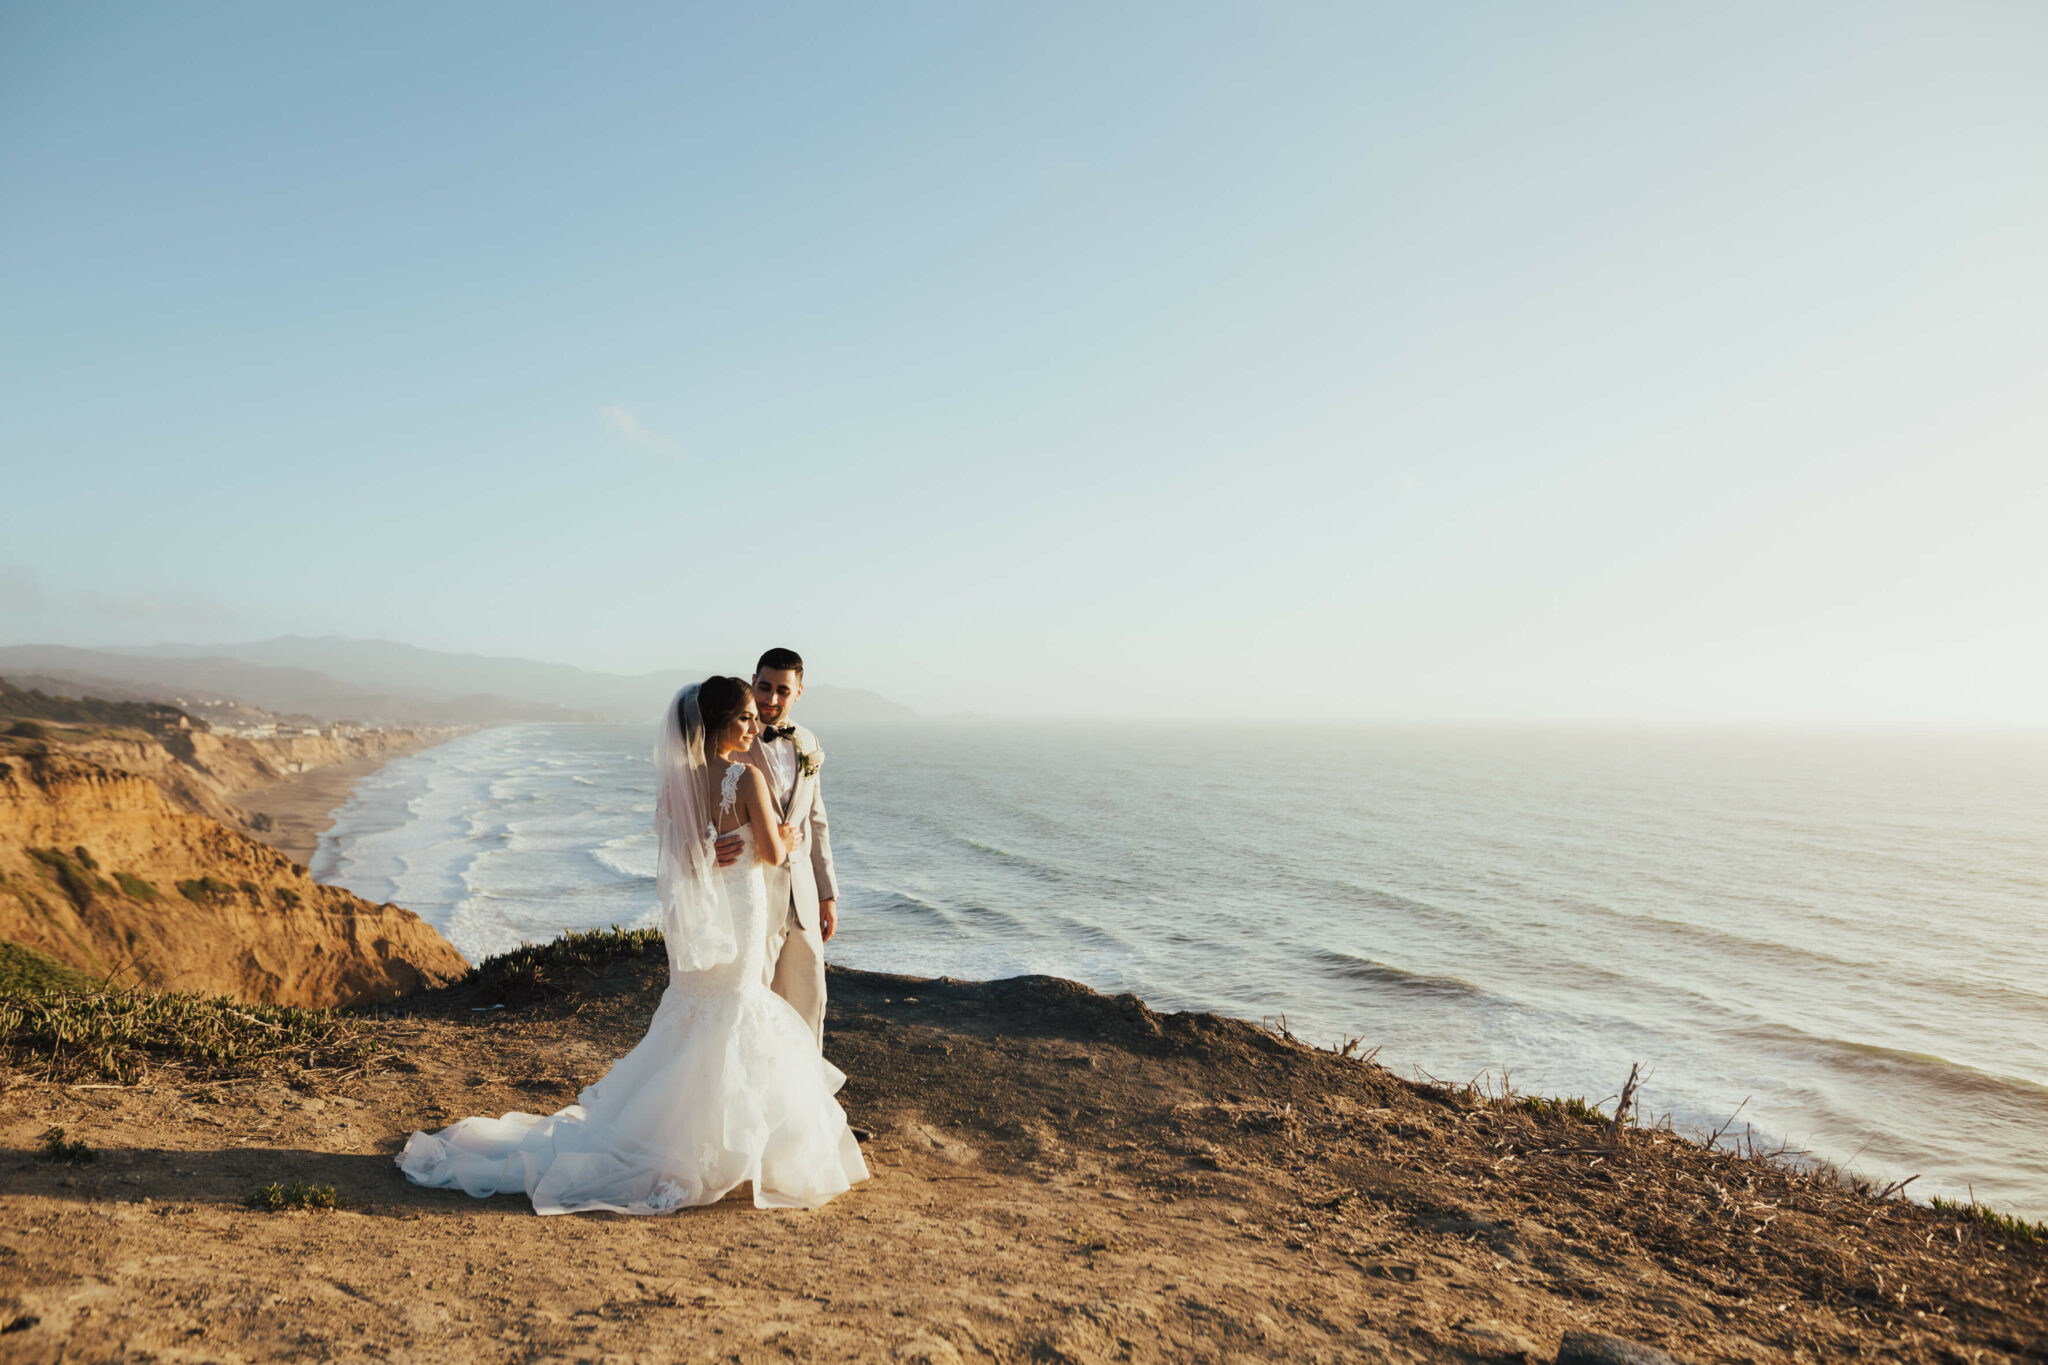 San Francisco Airport Marriott Waterfront Wedding Venue | Wedding Video John & Luma